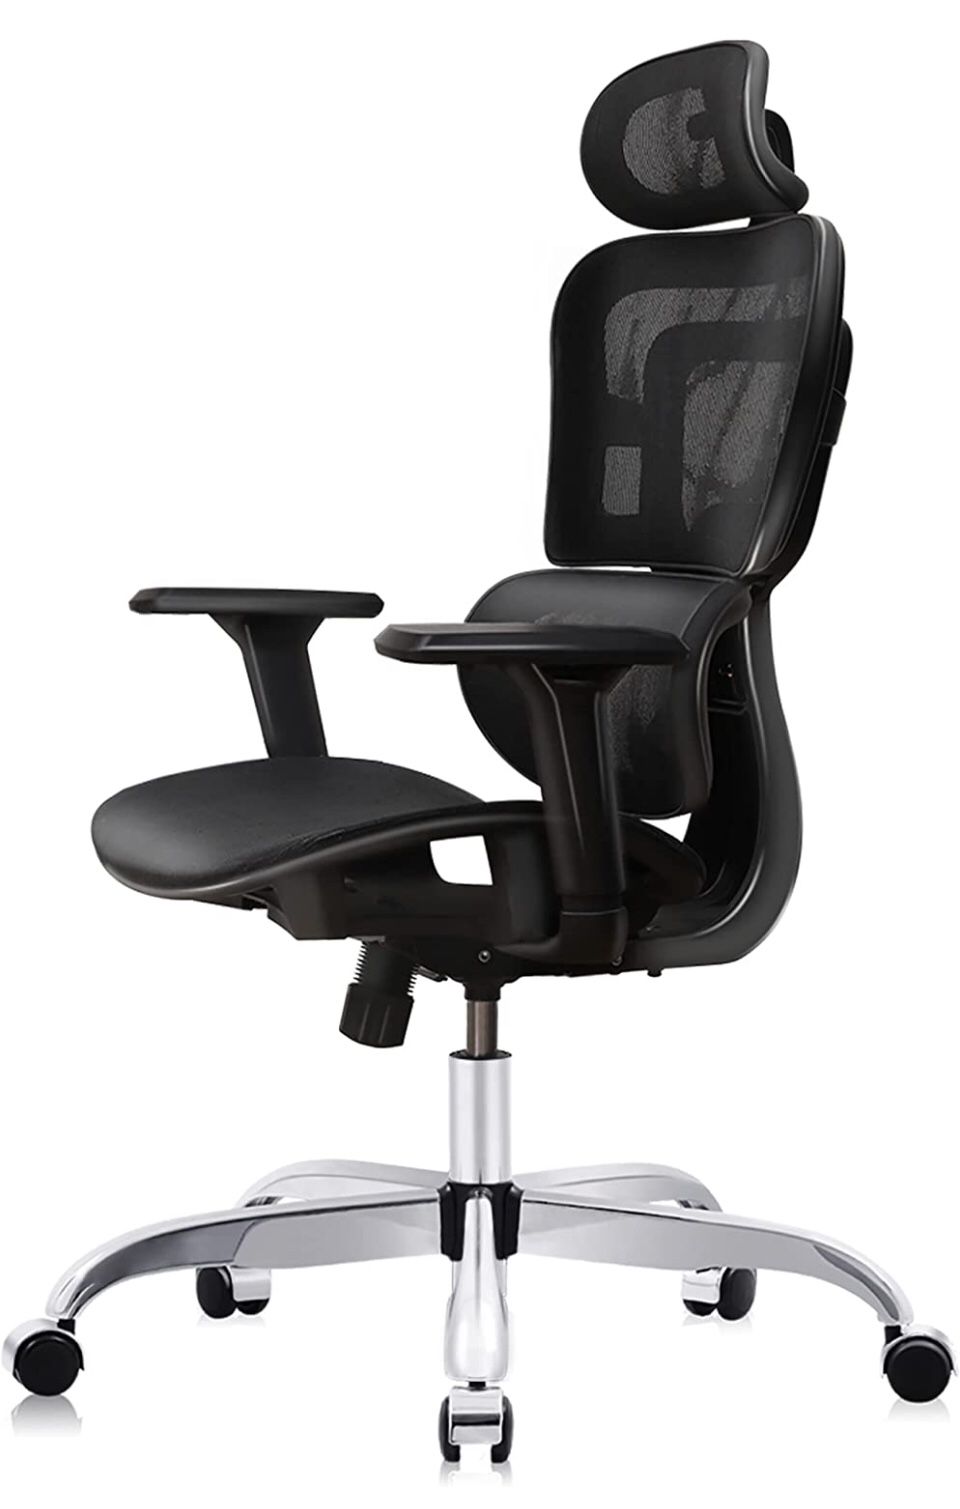 FelixKing Ergonomic Desk Chair with 3D Adjustable Headrest and Armrests Lumbar Support